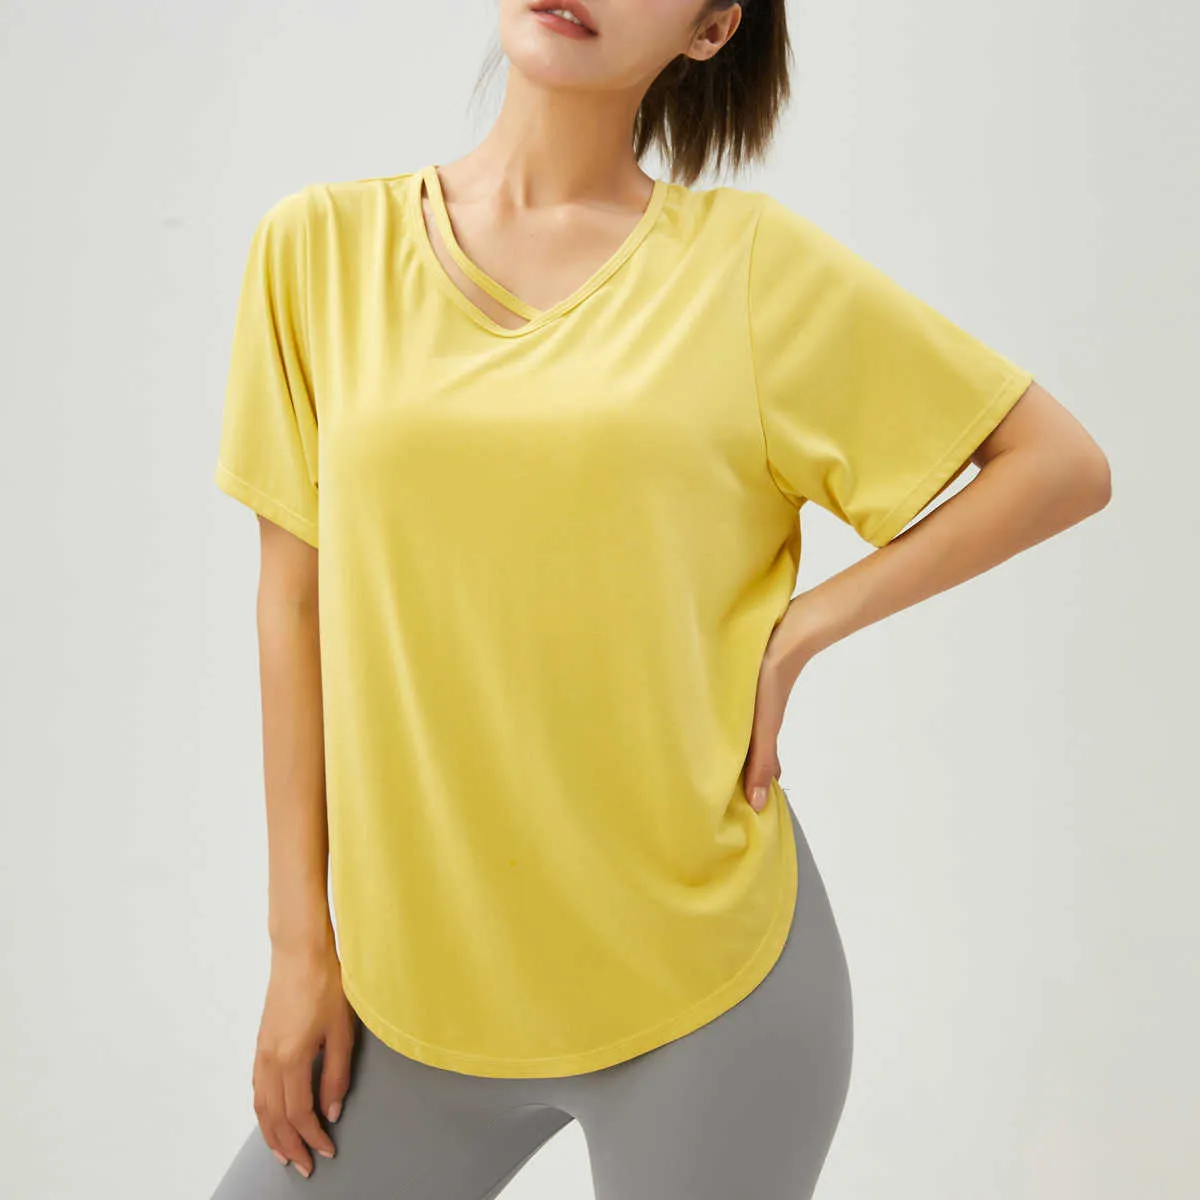 Yoga sport short-sleeved t-shirt women's quick drying loose